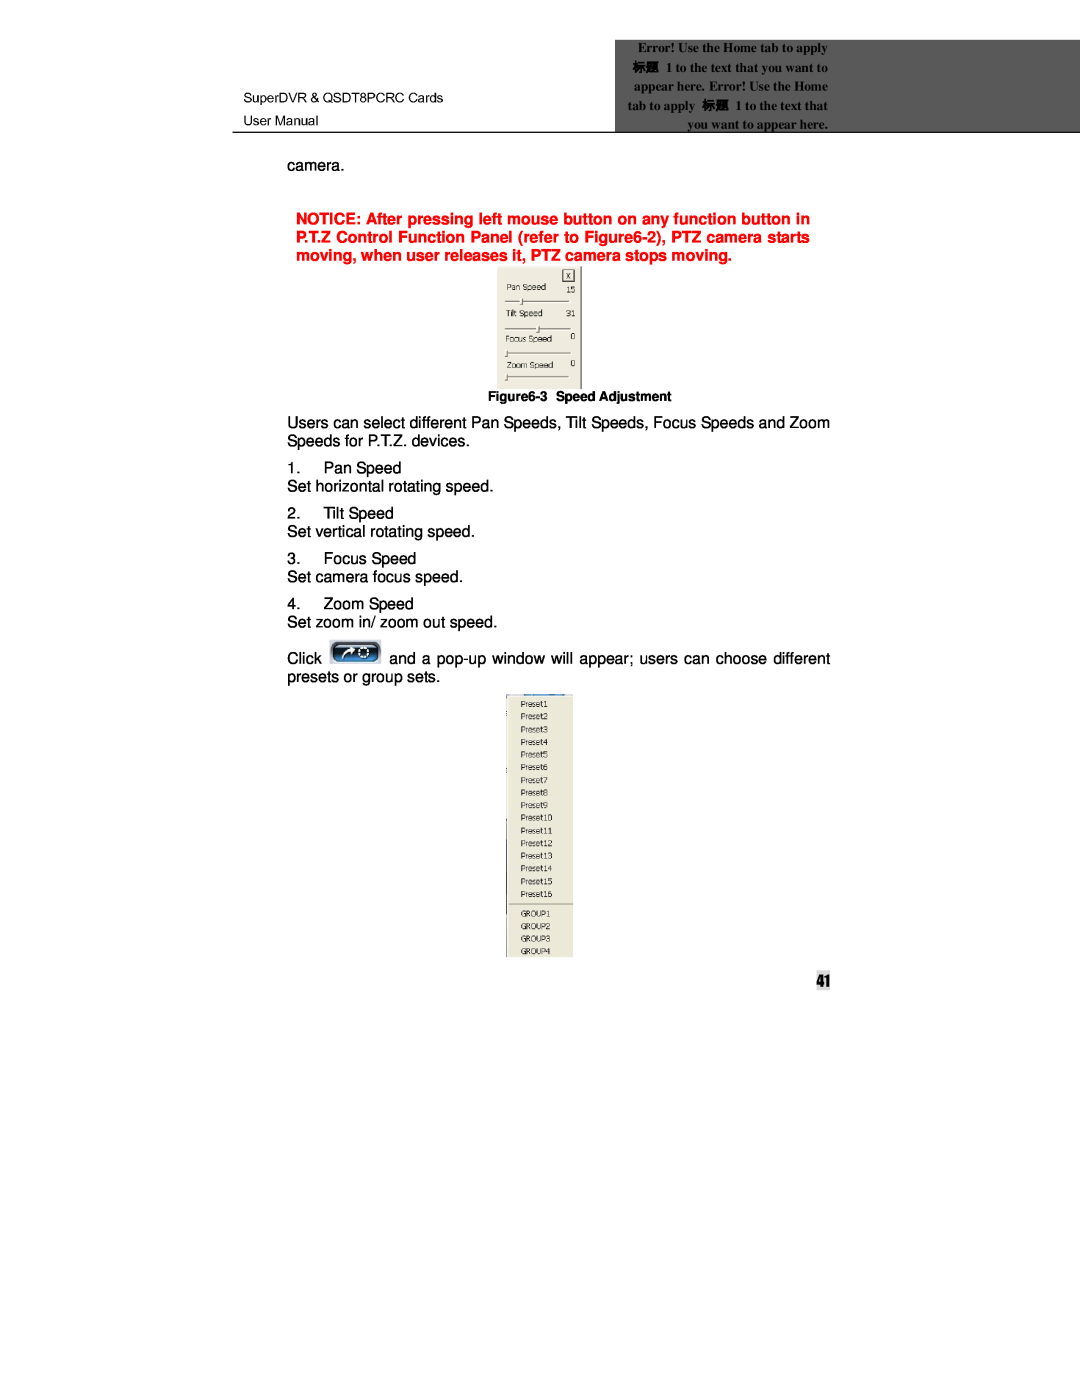 Q-See manual User Manual, SuperDVR & QSDT8PCRC Cards, camera 